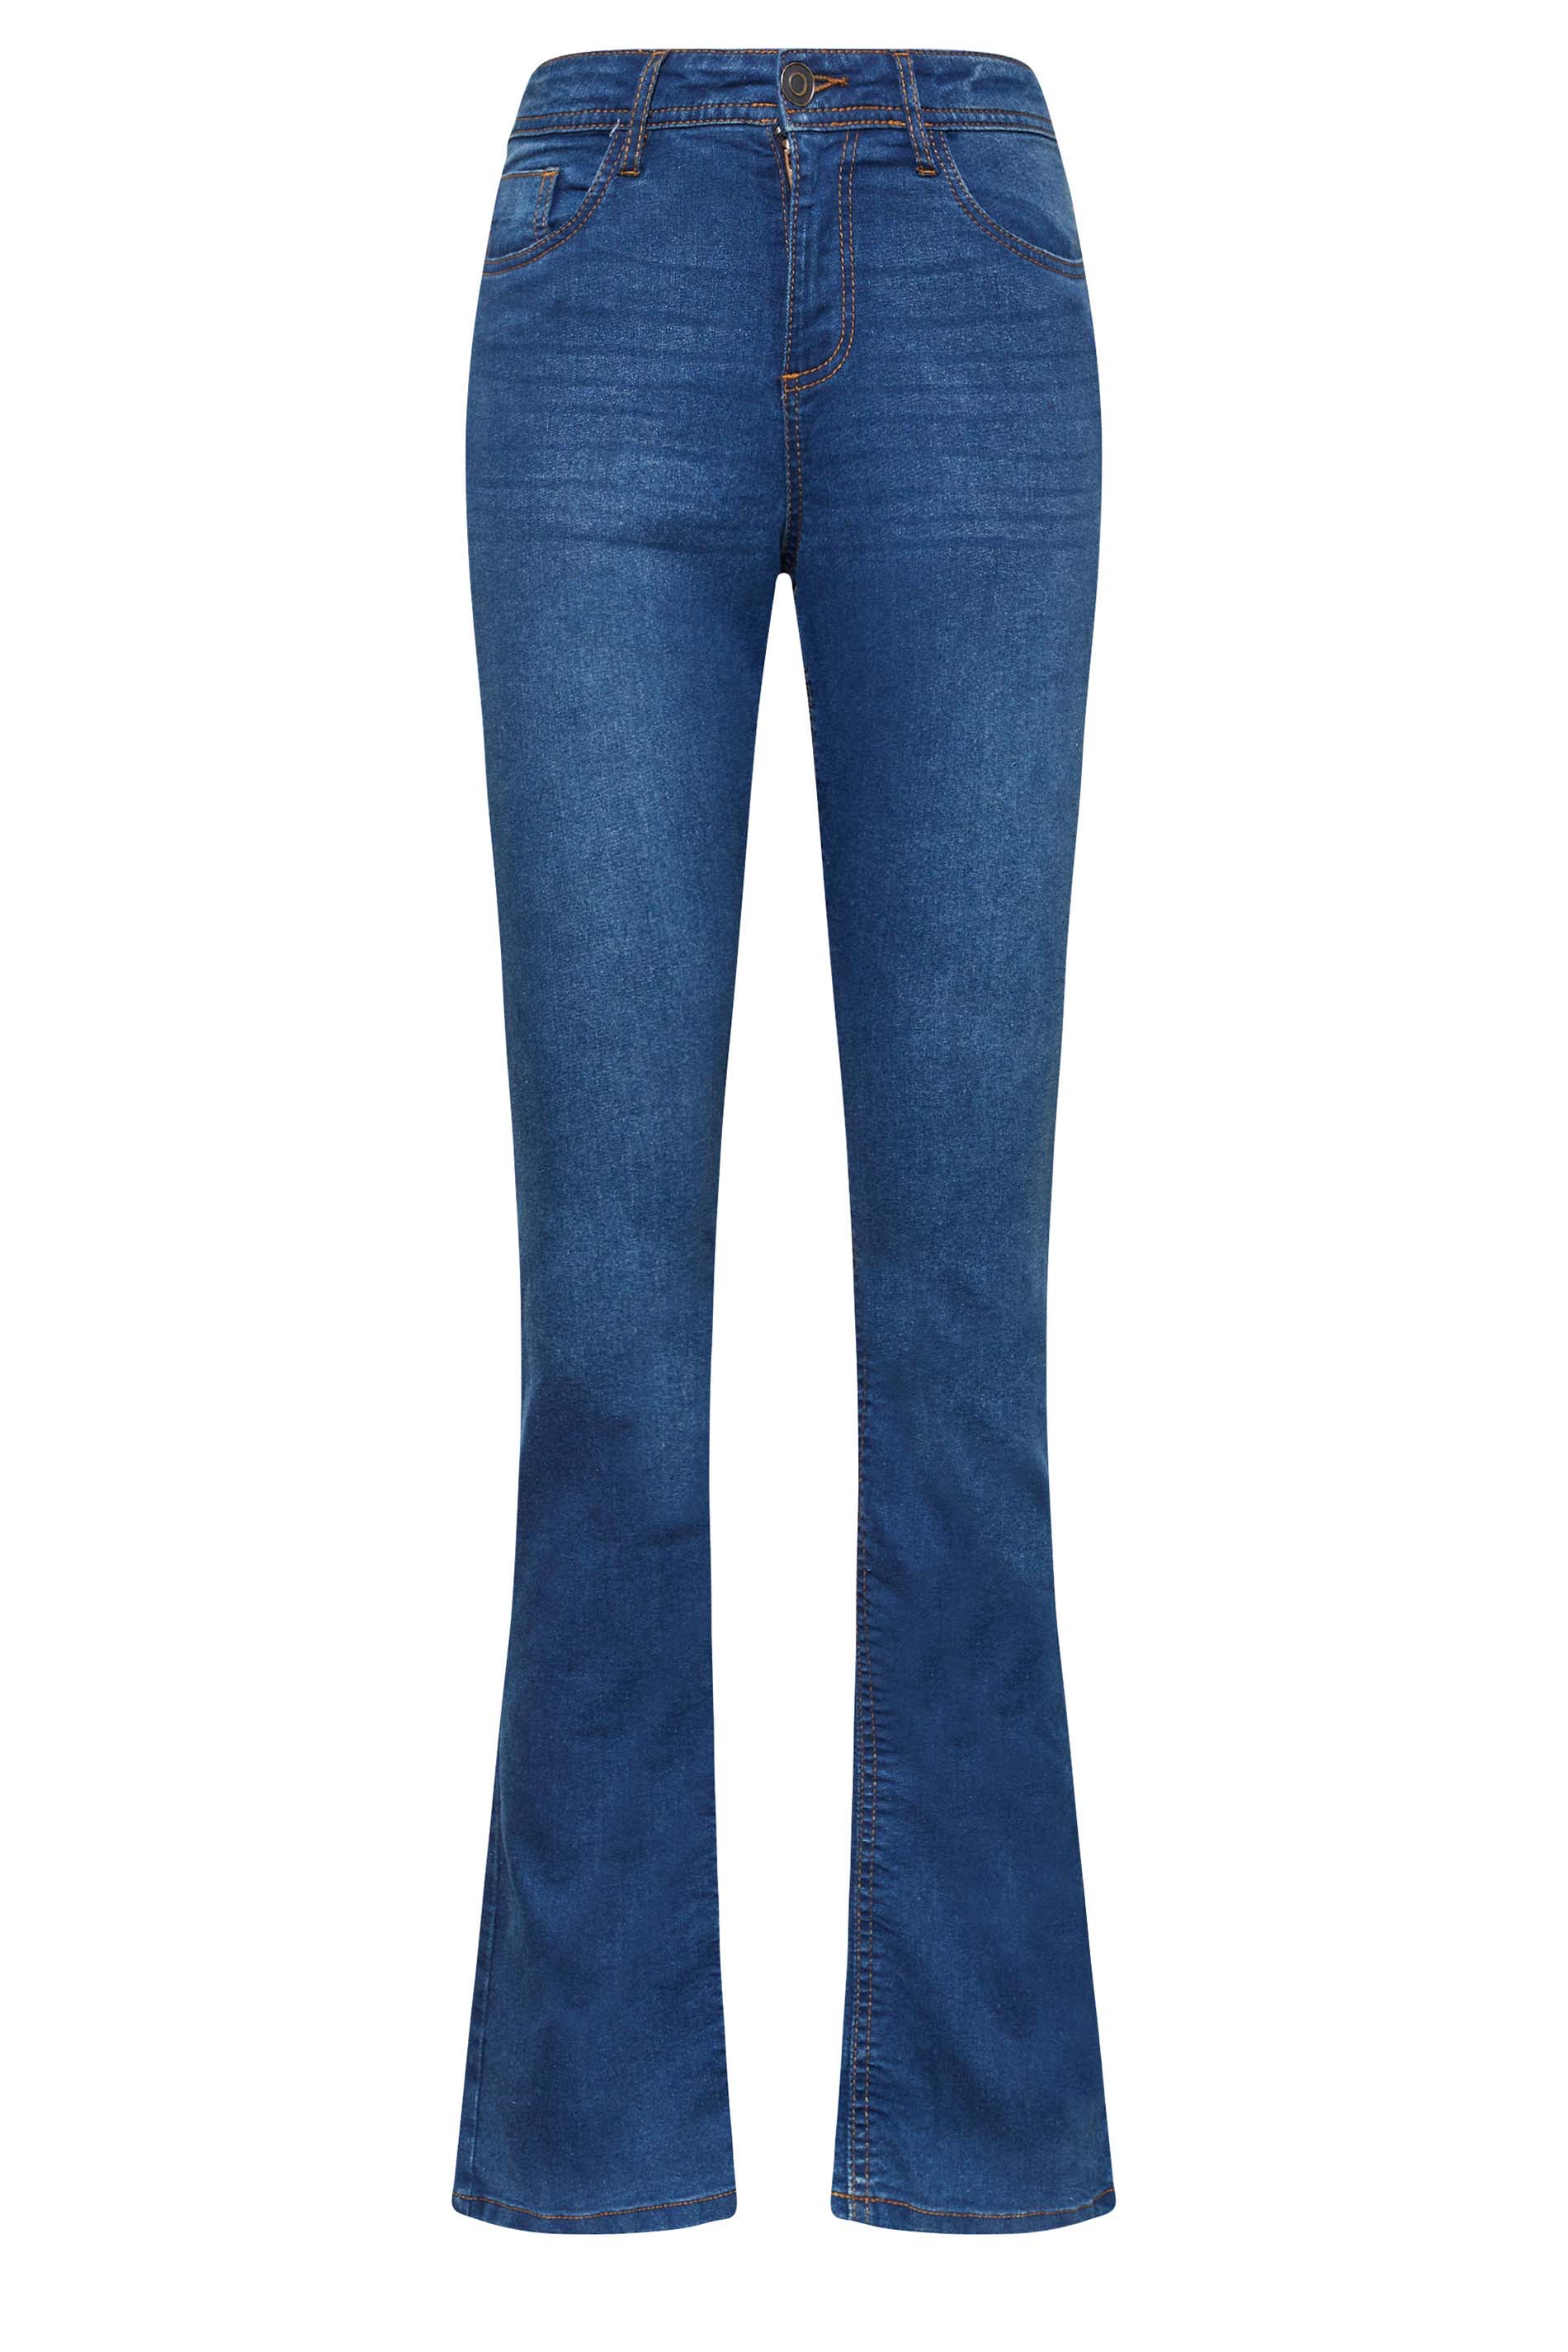 Tall Women's Blue RAE Bootcut Jeans | Long Tall Sally